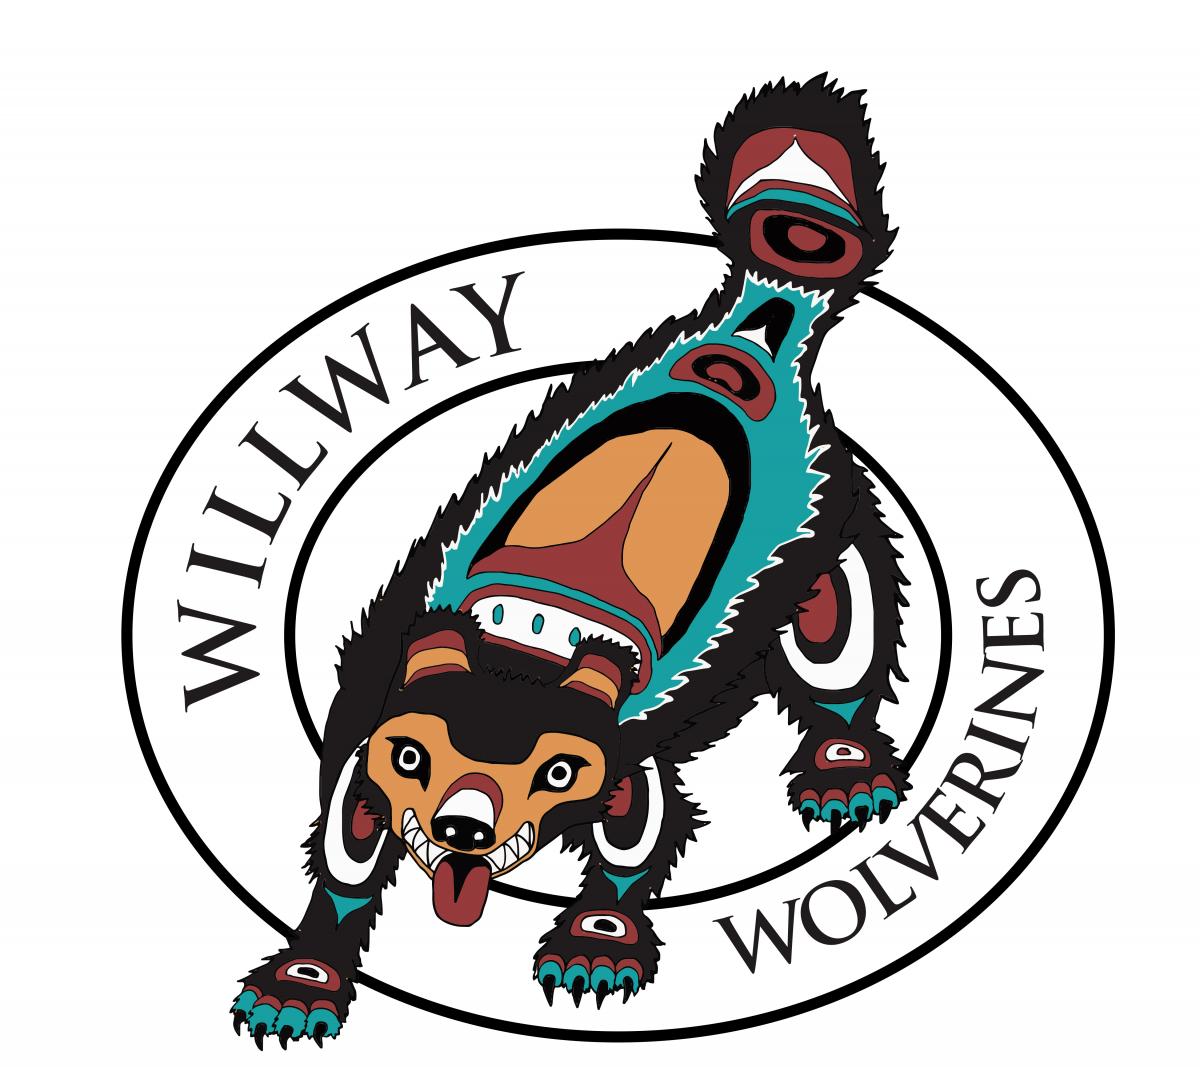 Willway Elementary School